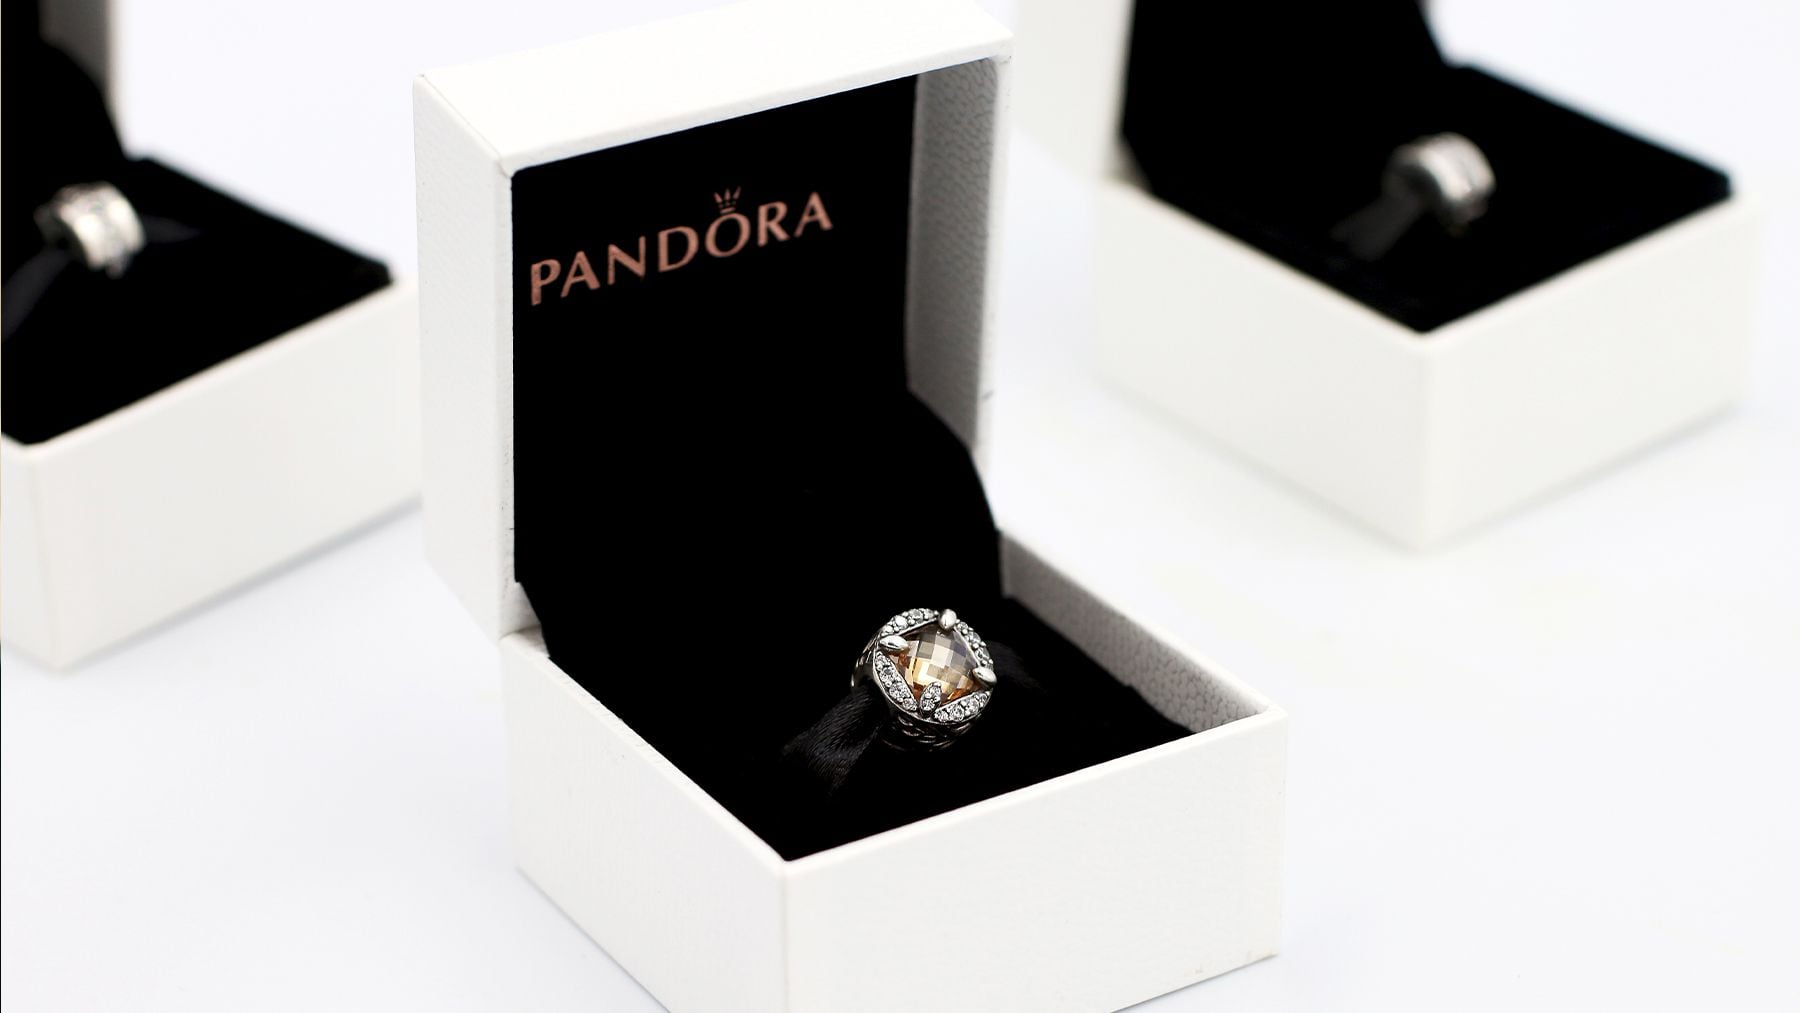 Pandora Sees ‘Healthy’ Sales So Far This Year